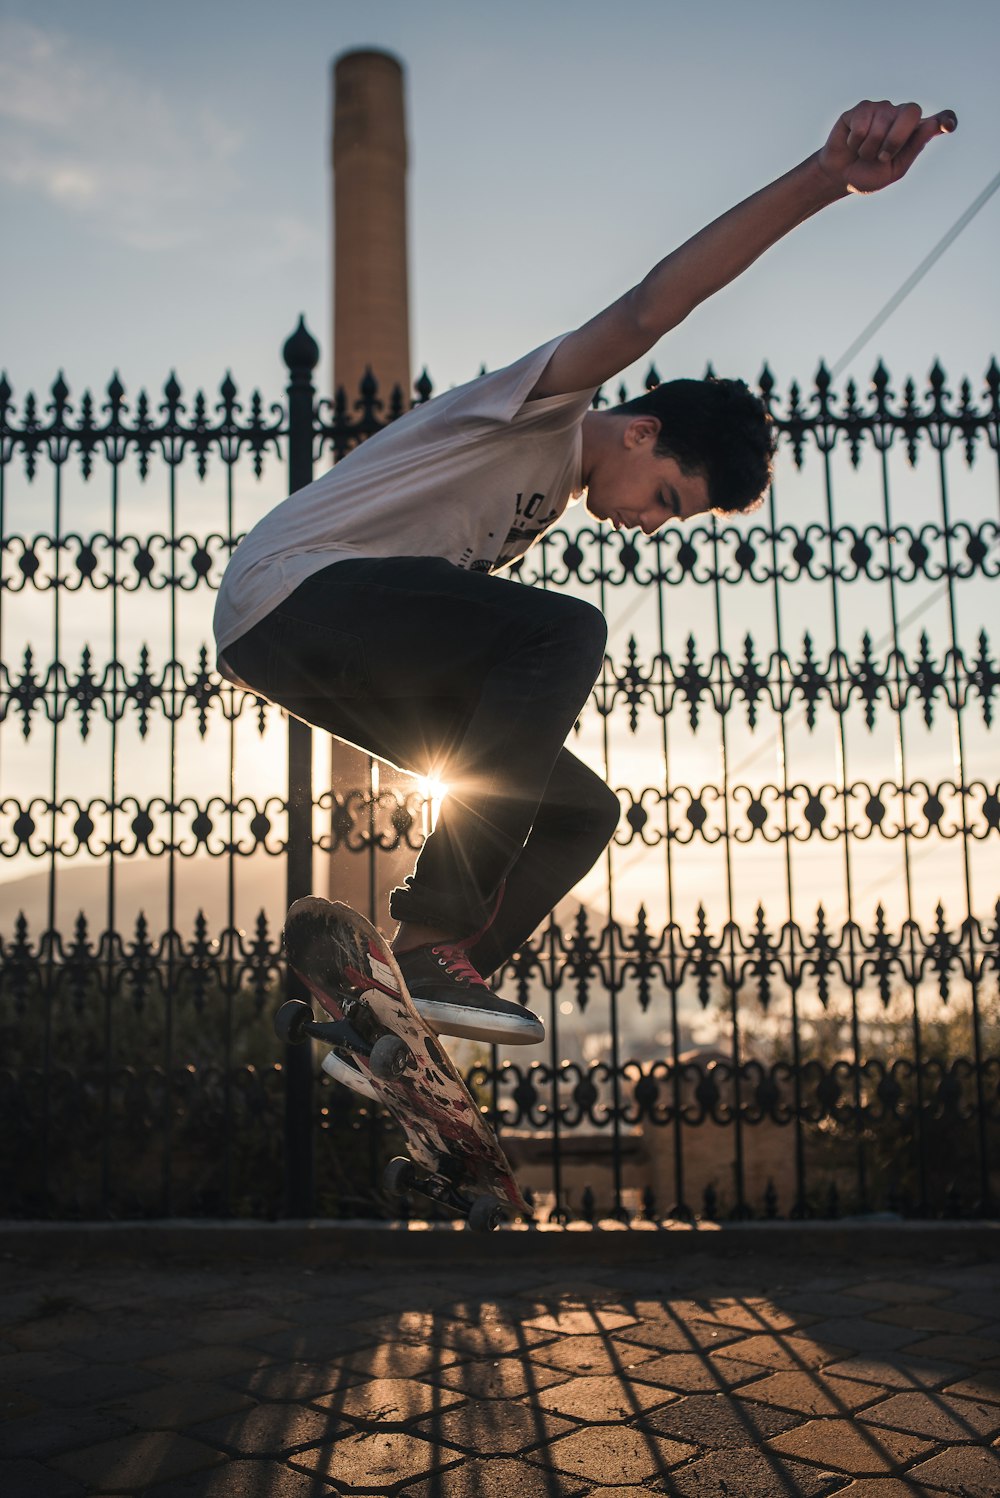 man doing skateboard trick near black steel fence during daytime